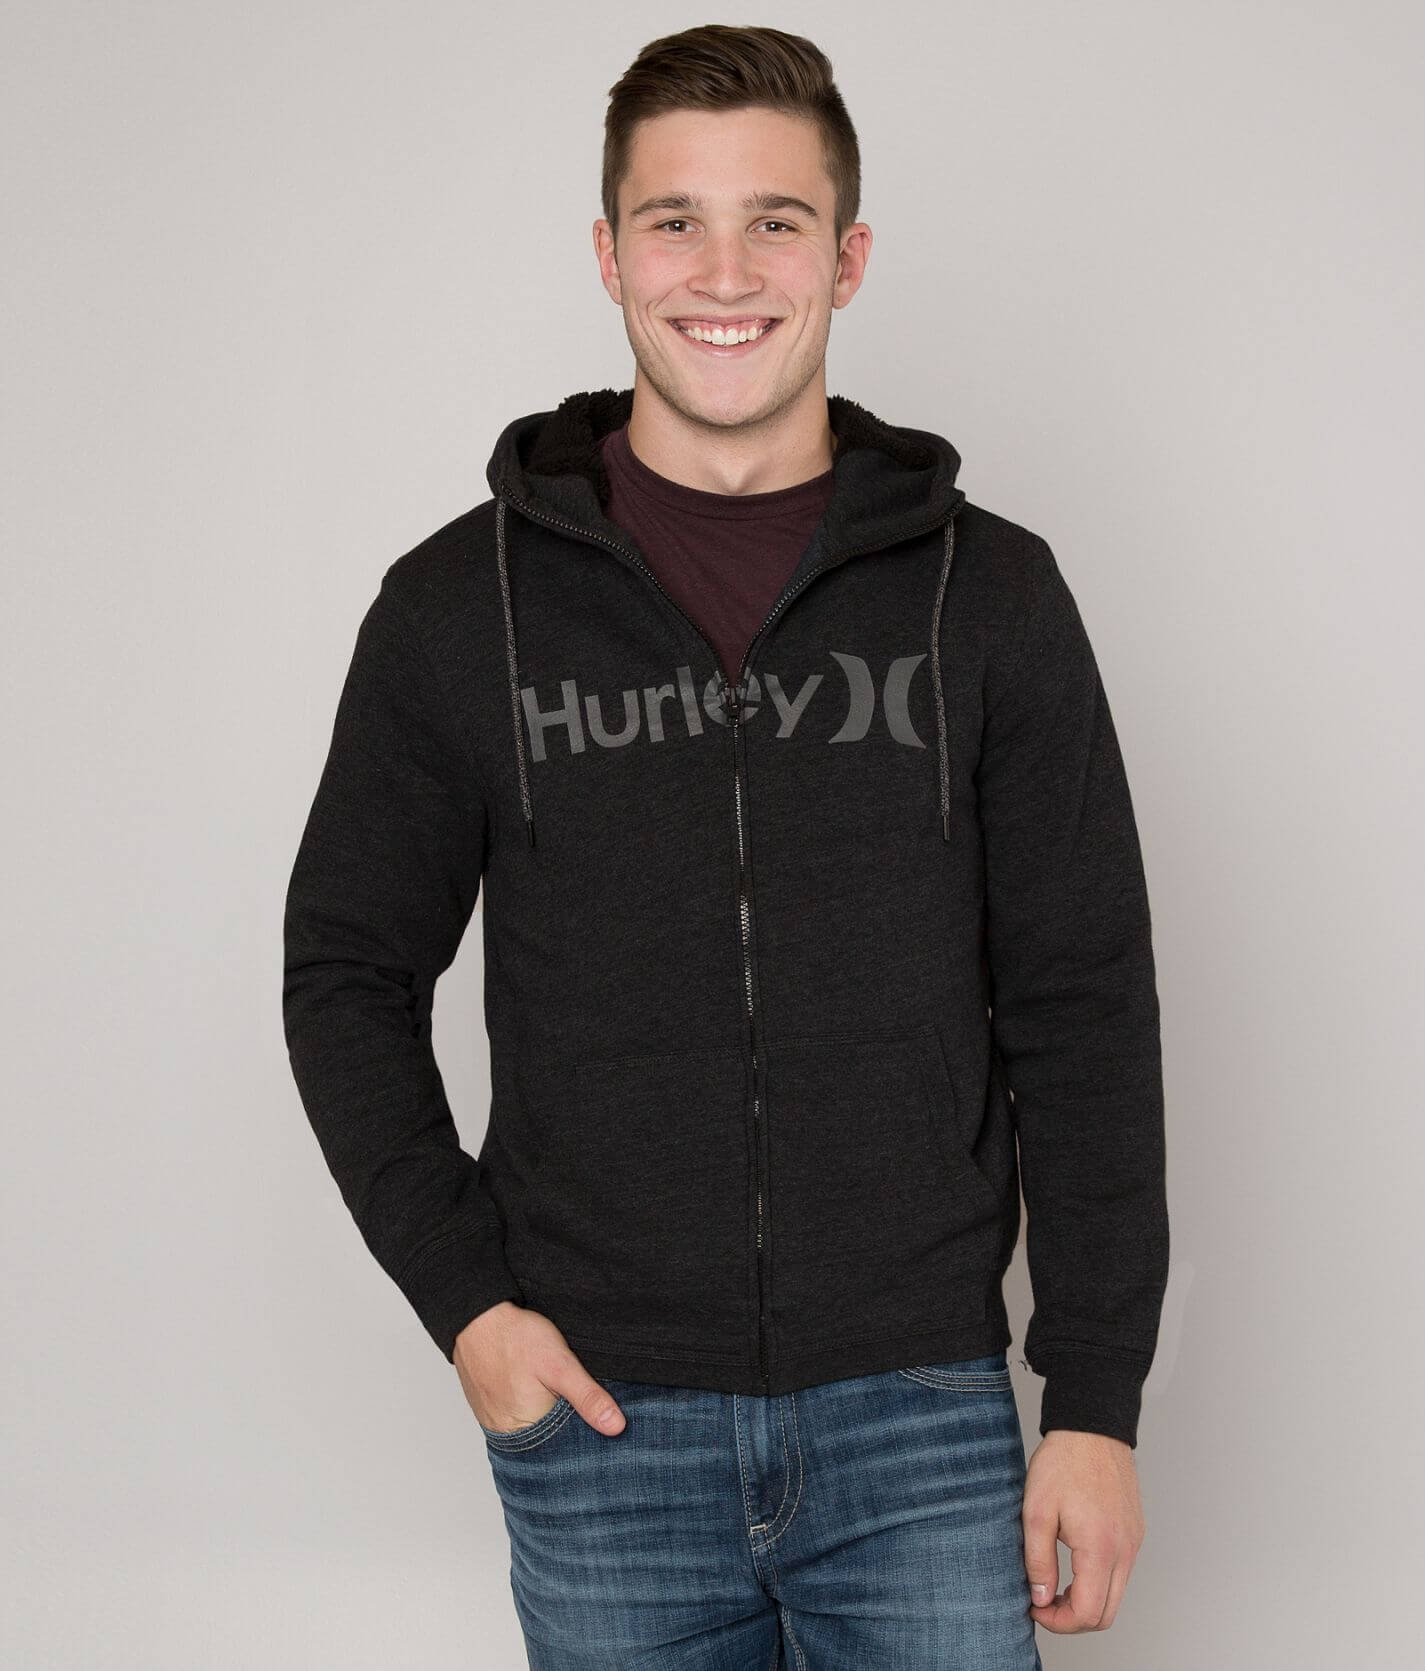 trimmen verlies uzelf Chinese kool Hurley Bayside Hooded Sweatshirt - Men's Sweatshirts in Black | Buckle